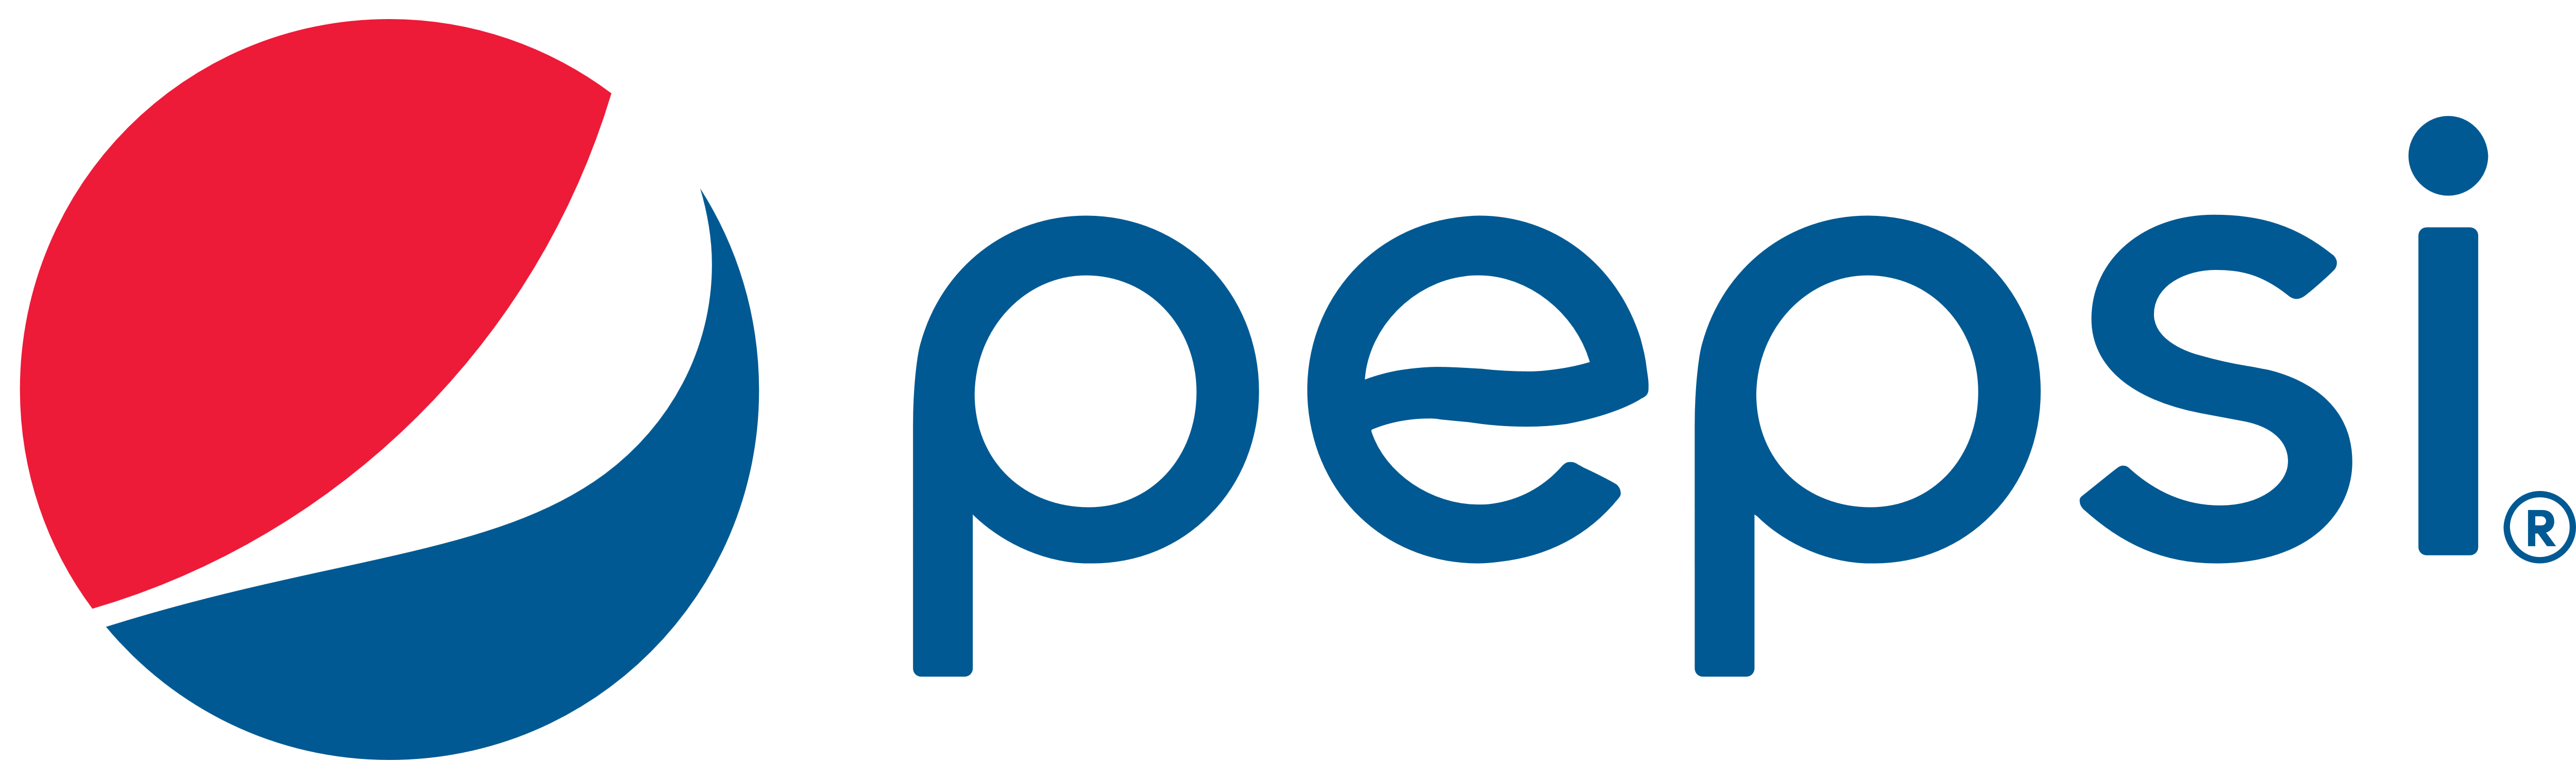 Logotipo Pepsi